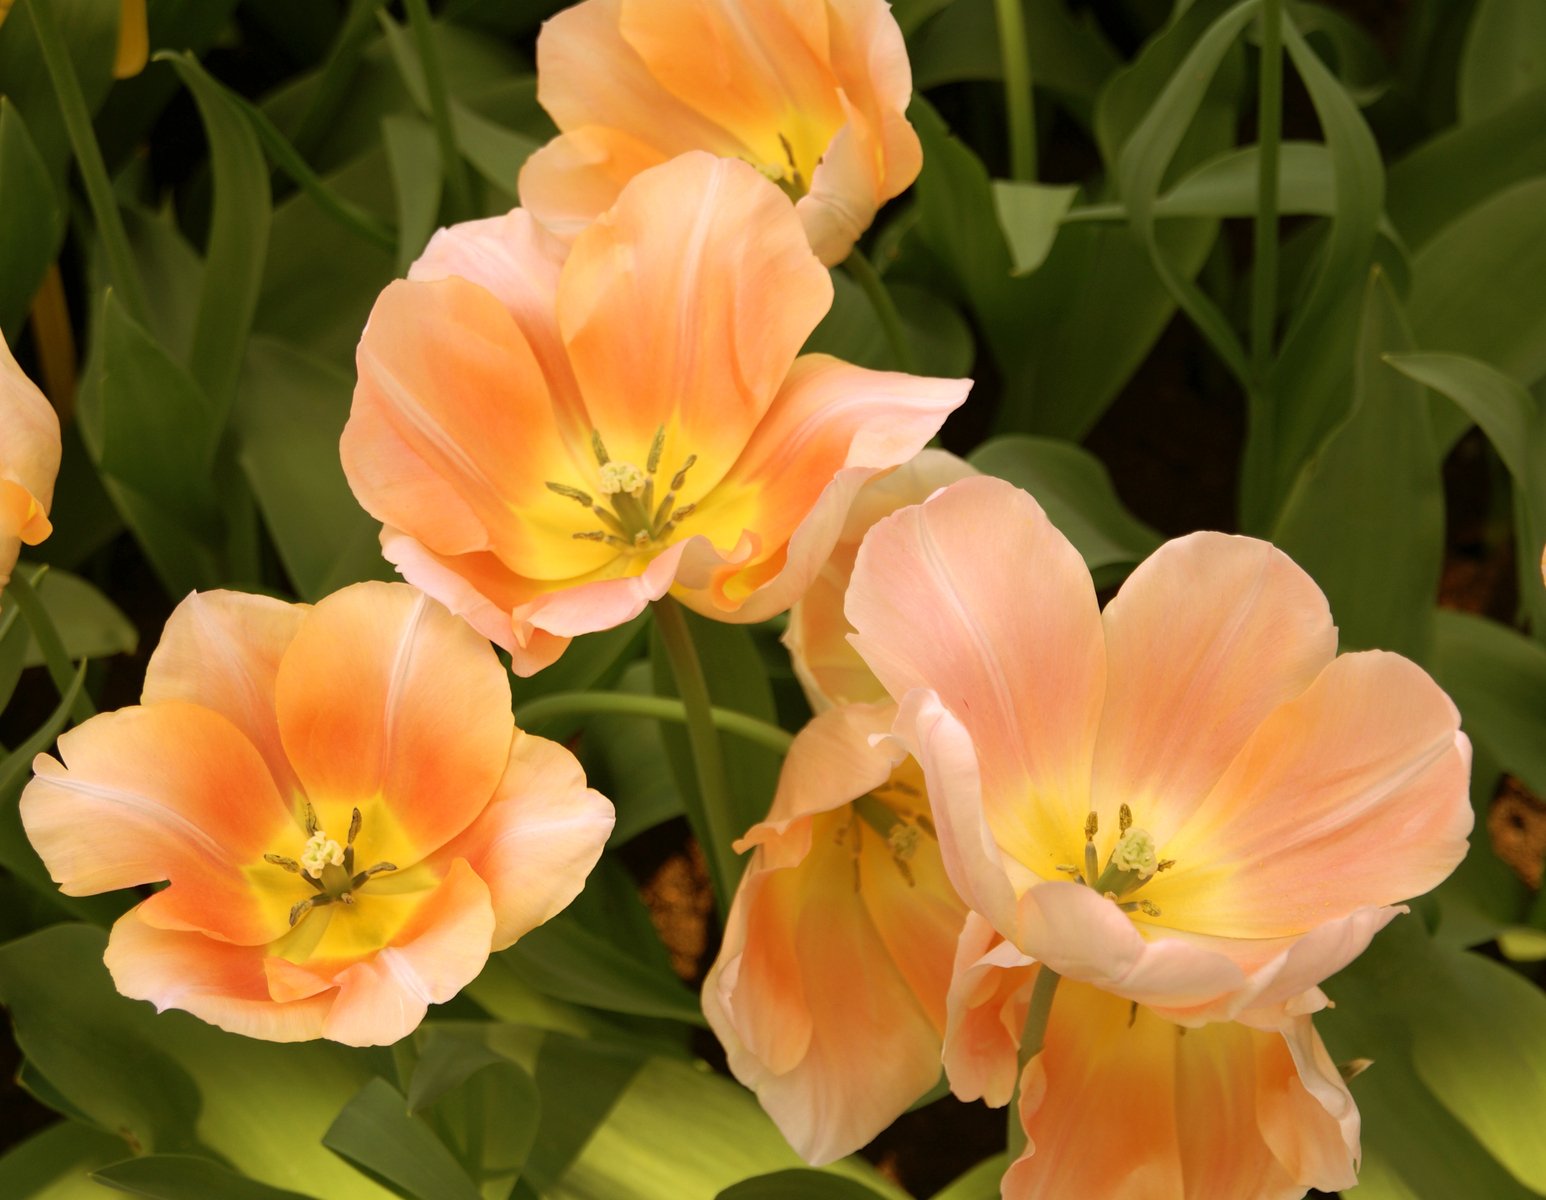 three light orange tulips on the green and leafy ground